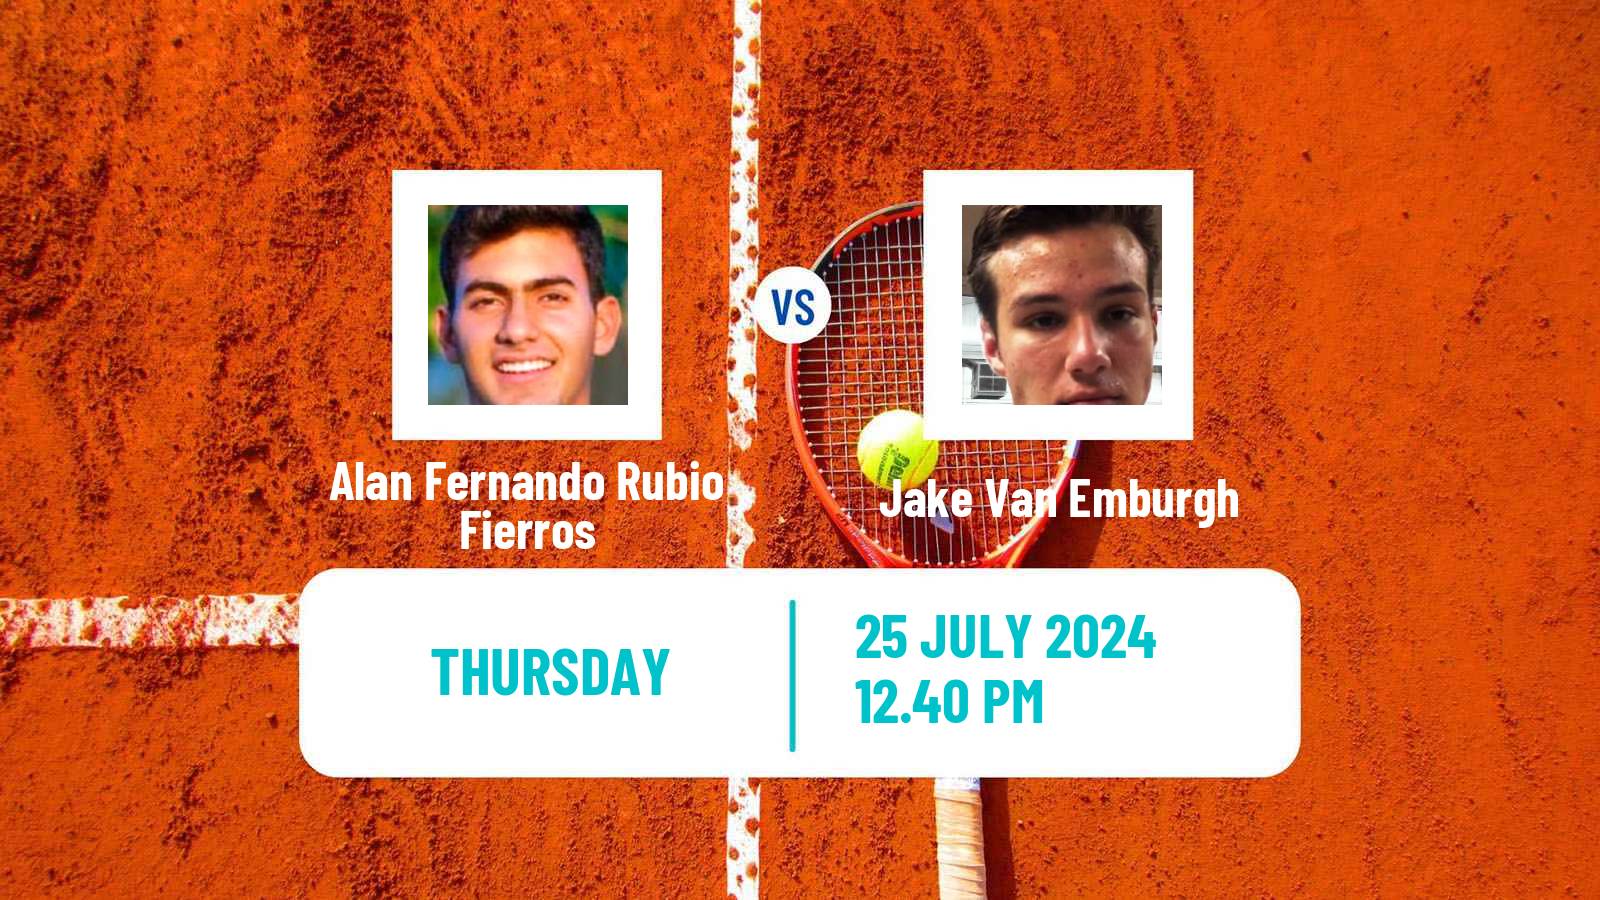 Tennis ITF M15 Huamantla 2 Men Alan Fernando Rubio Fierros - Jake Van Emburgh